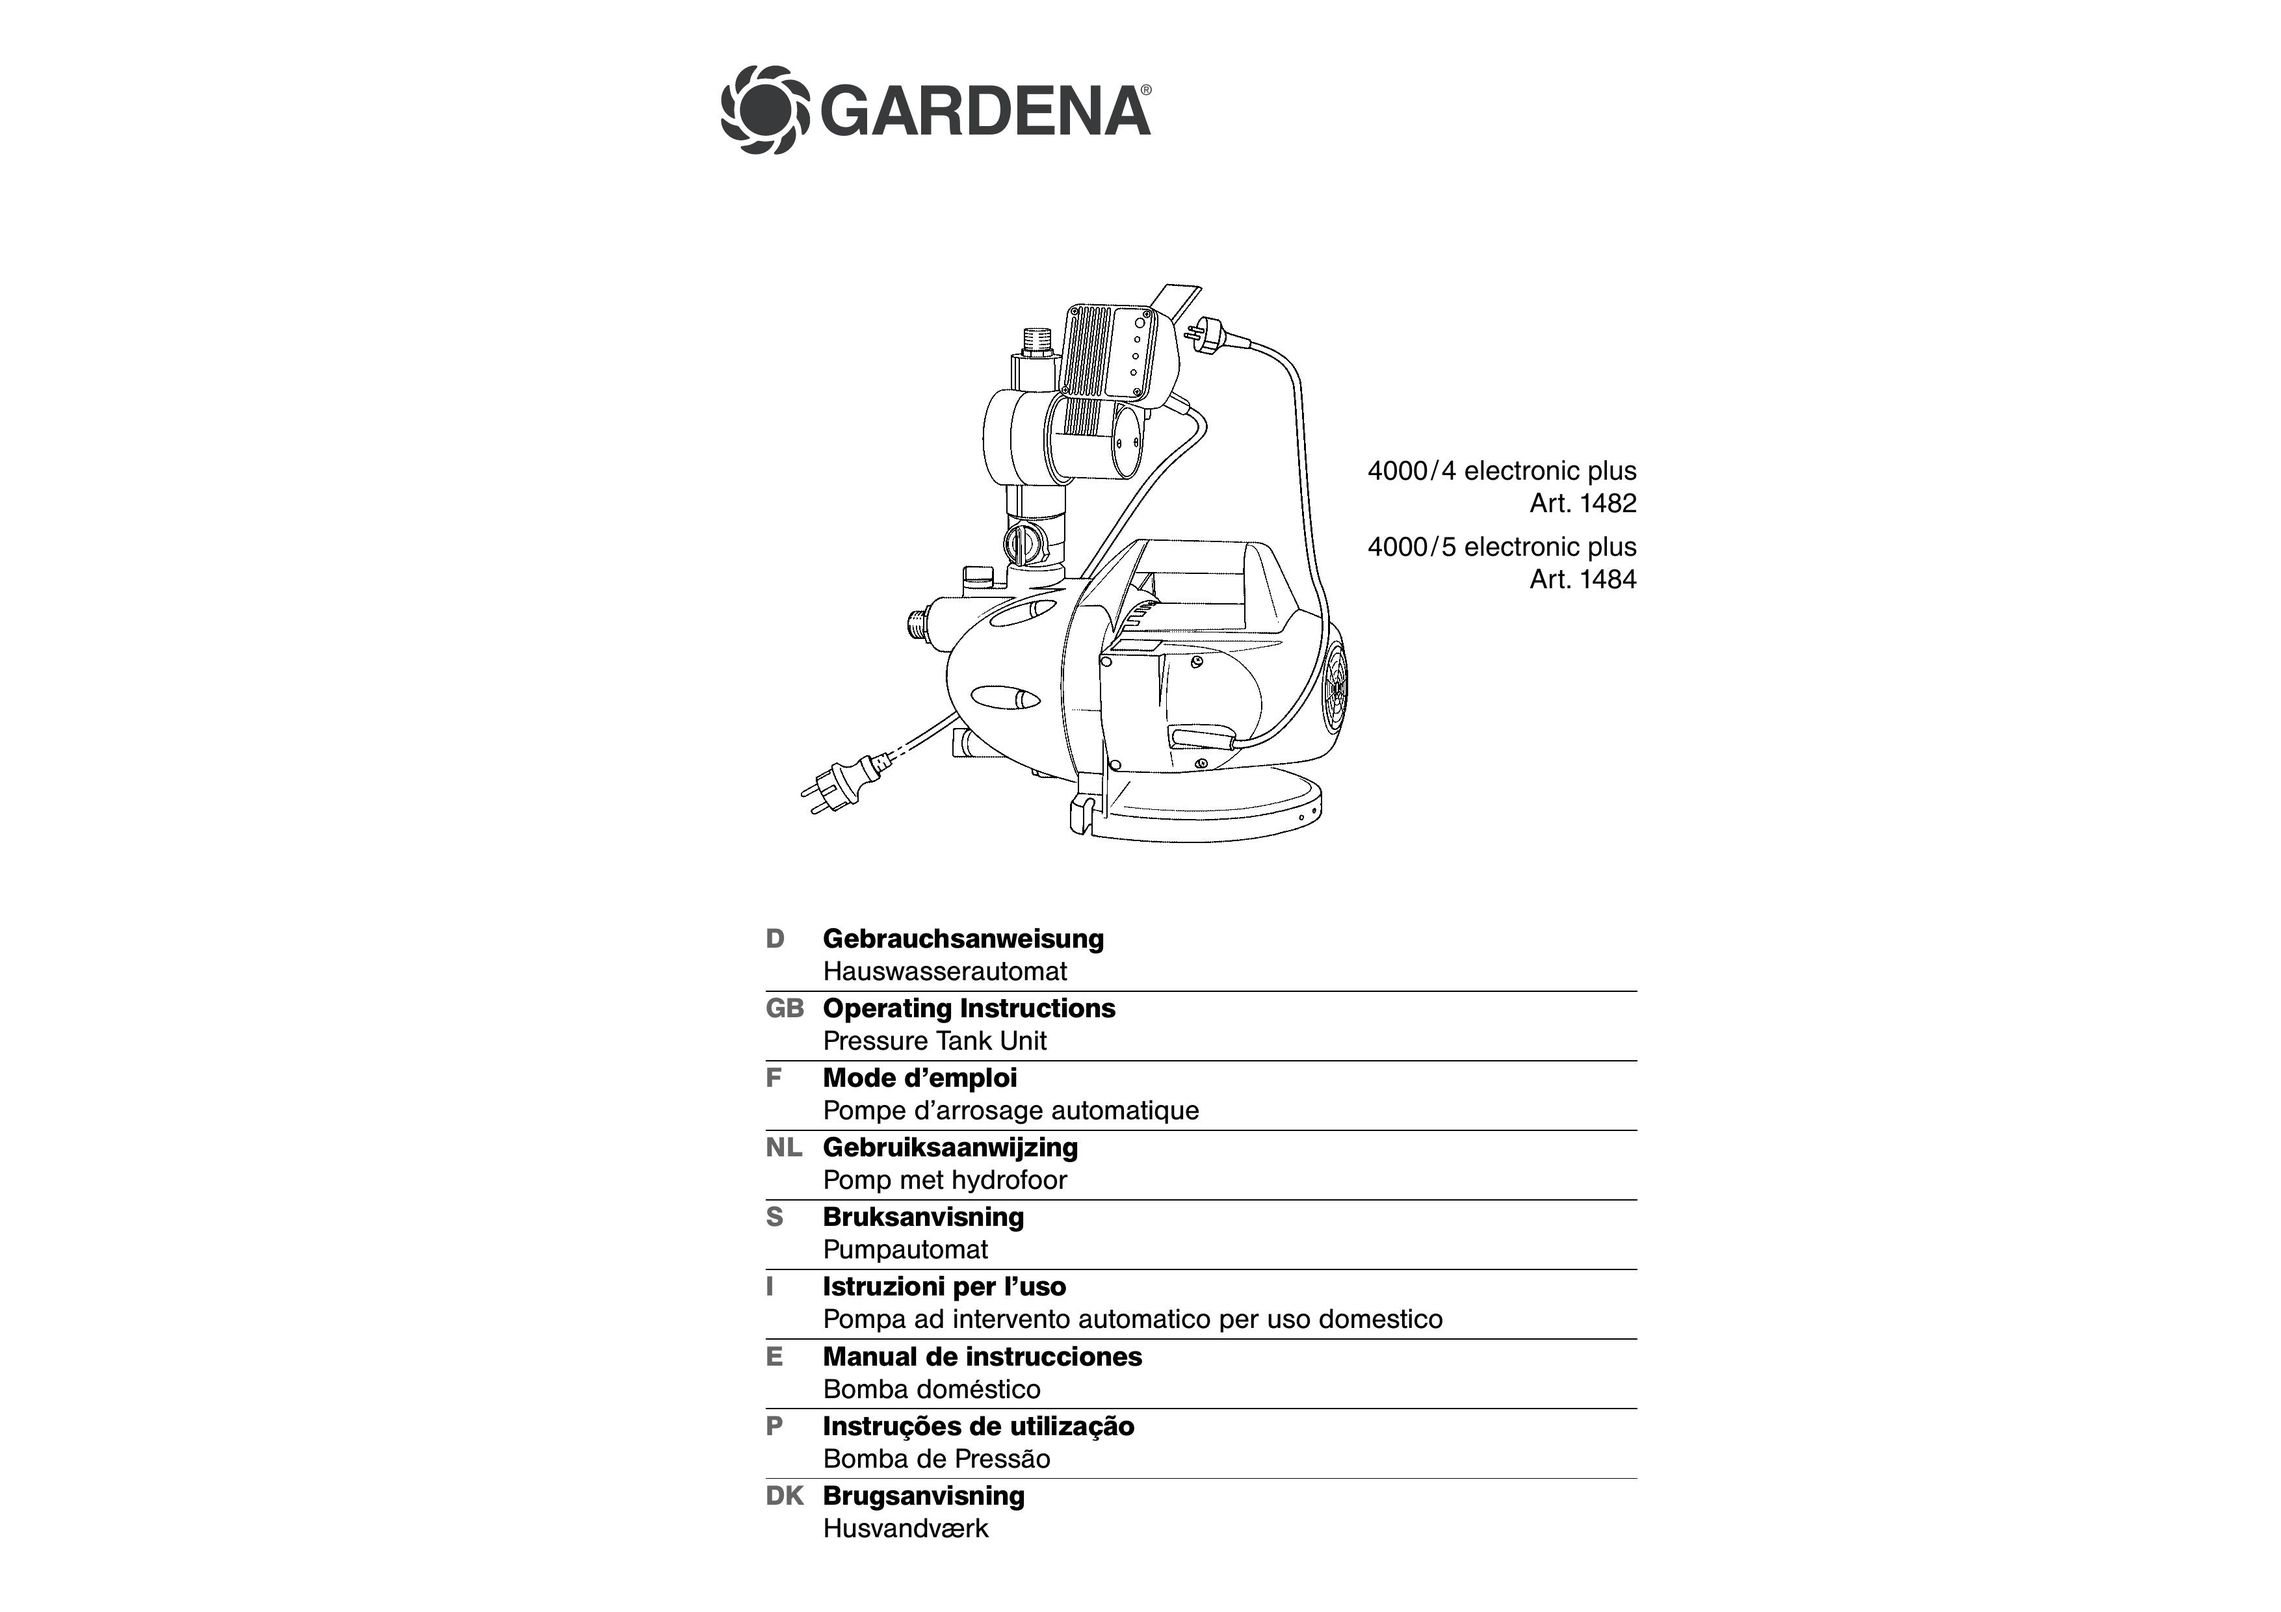 Gardena Art.1482 Coffeemaker User Manual